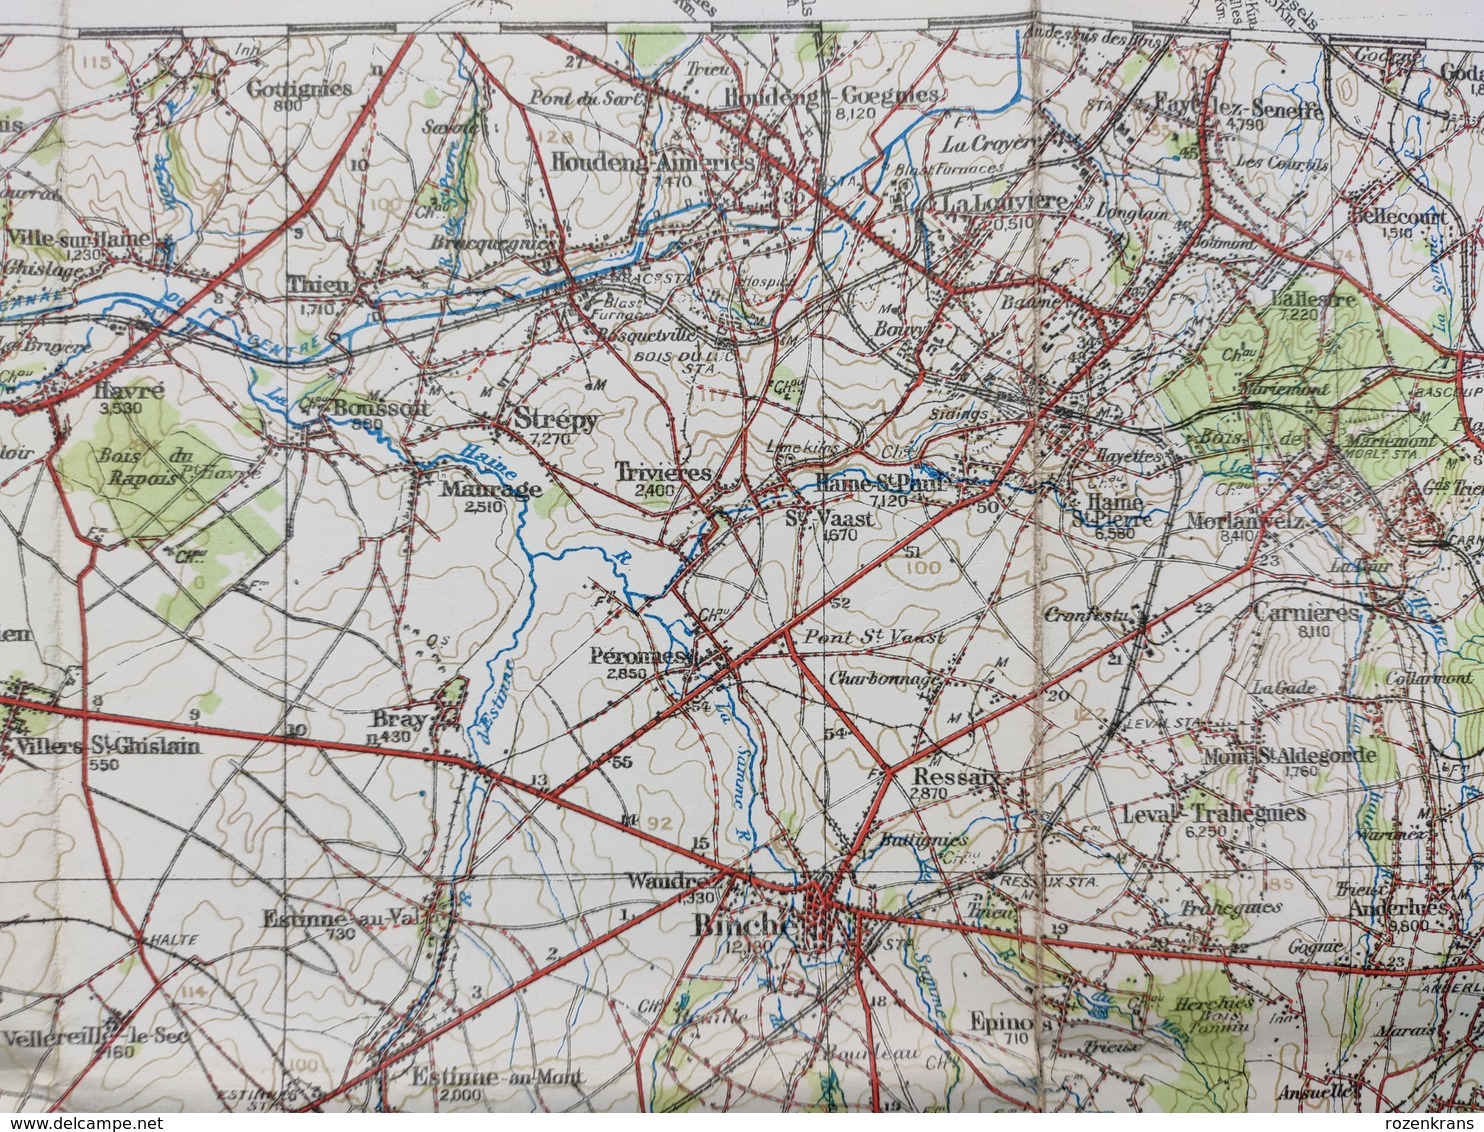 Carte Topographique Militaire UK War Office 1910 World War 1 WW1 Namur Phlippeville Florennes Charleroi Binche Chimay Gi